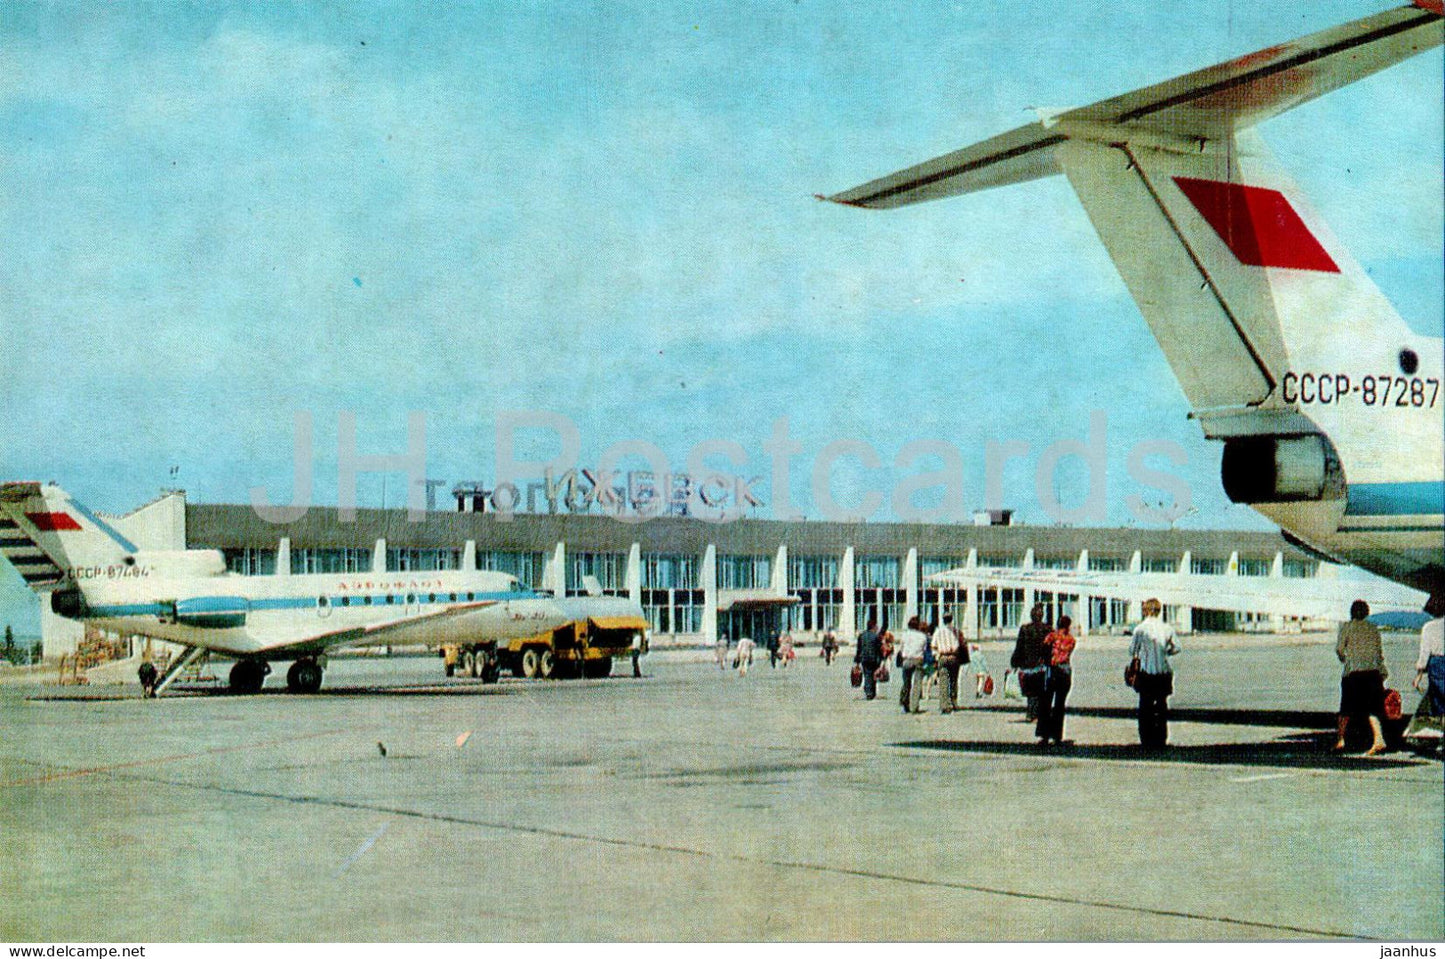 Izhevsk - Izhevsk airport - airplane - 1978 - Udmurtia - Russia USSR - unused - JH Postcards